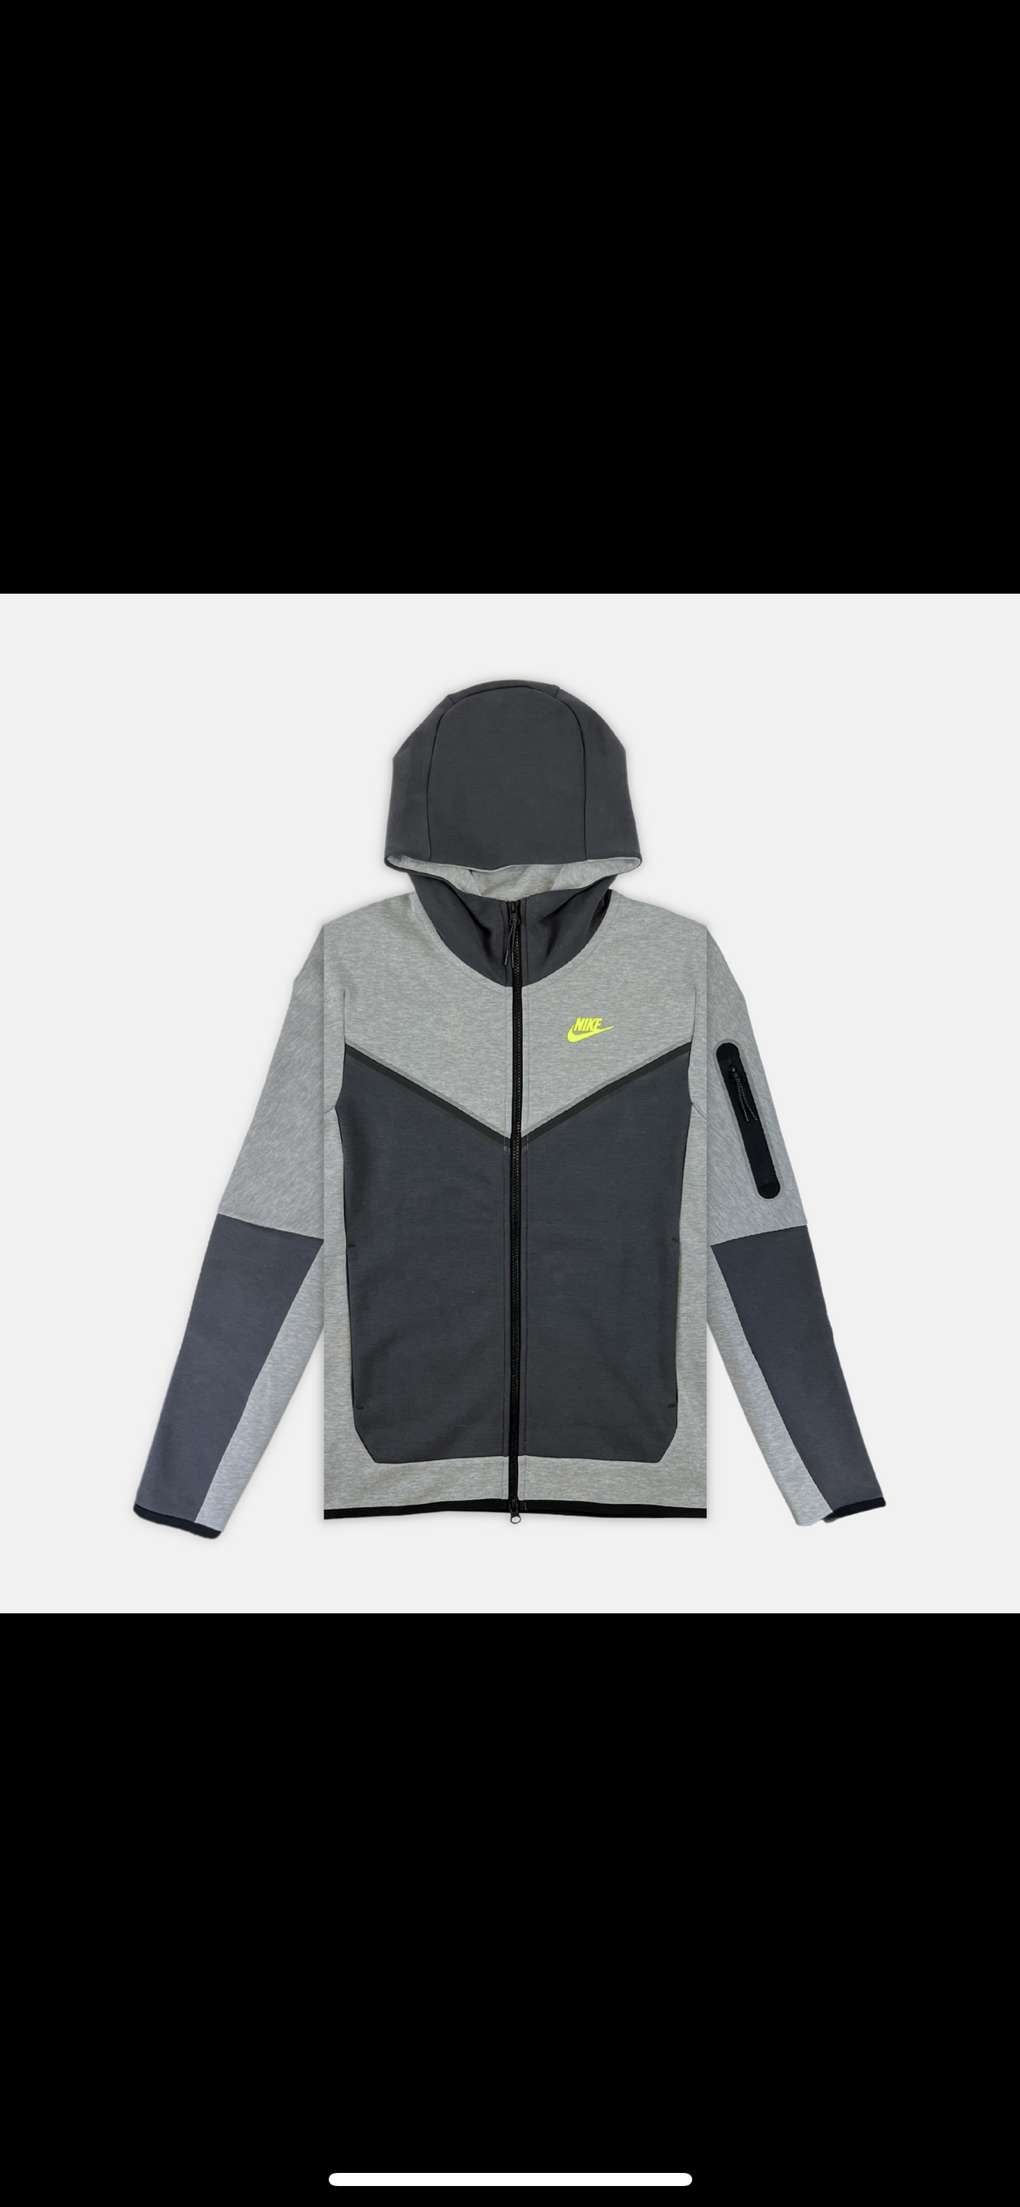 Nike Tech Fleece Set - Grey, Anthracite & Volt (3rd Gen) - No Sauce The Plug